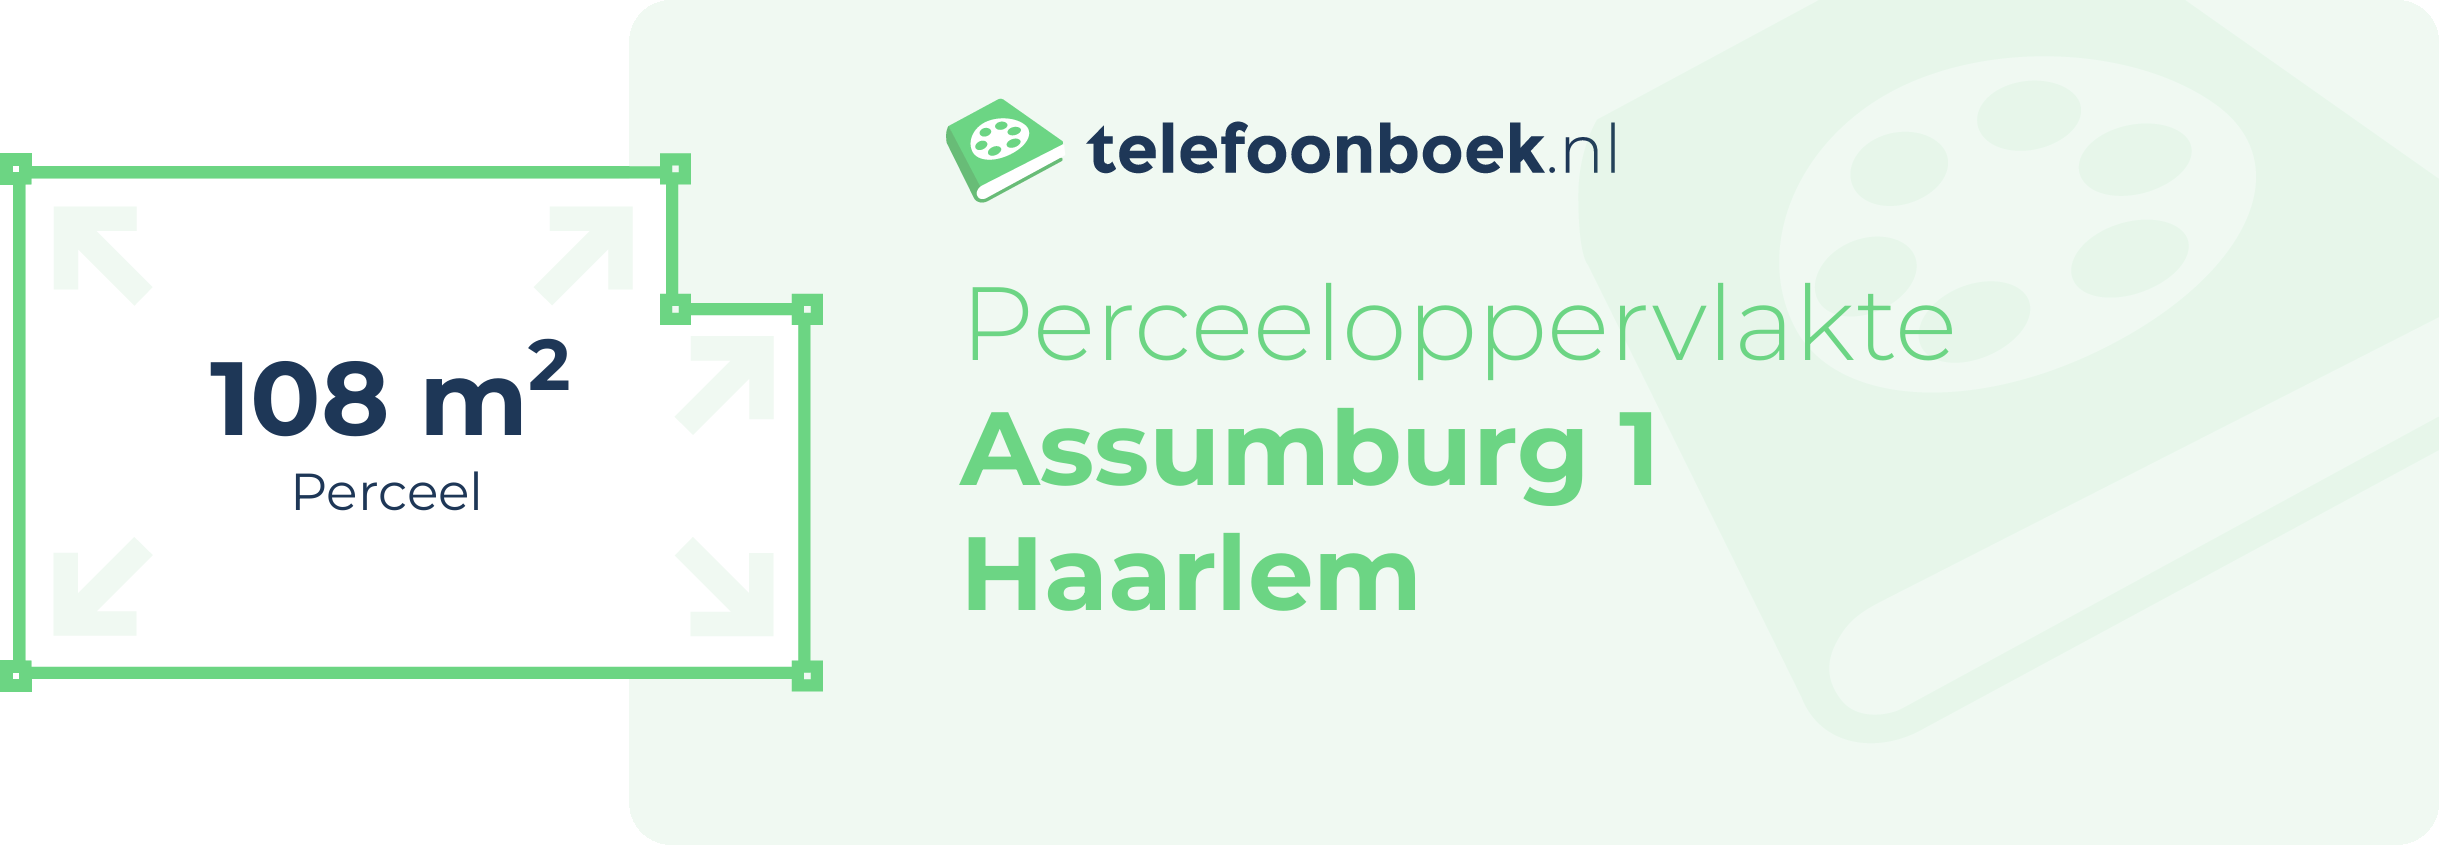 Perceeloppervlakte Assumburg 1 Haarlem